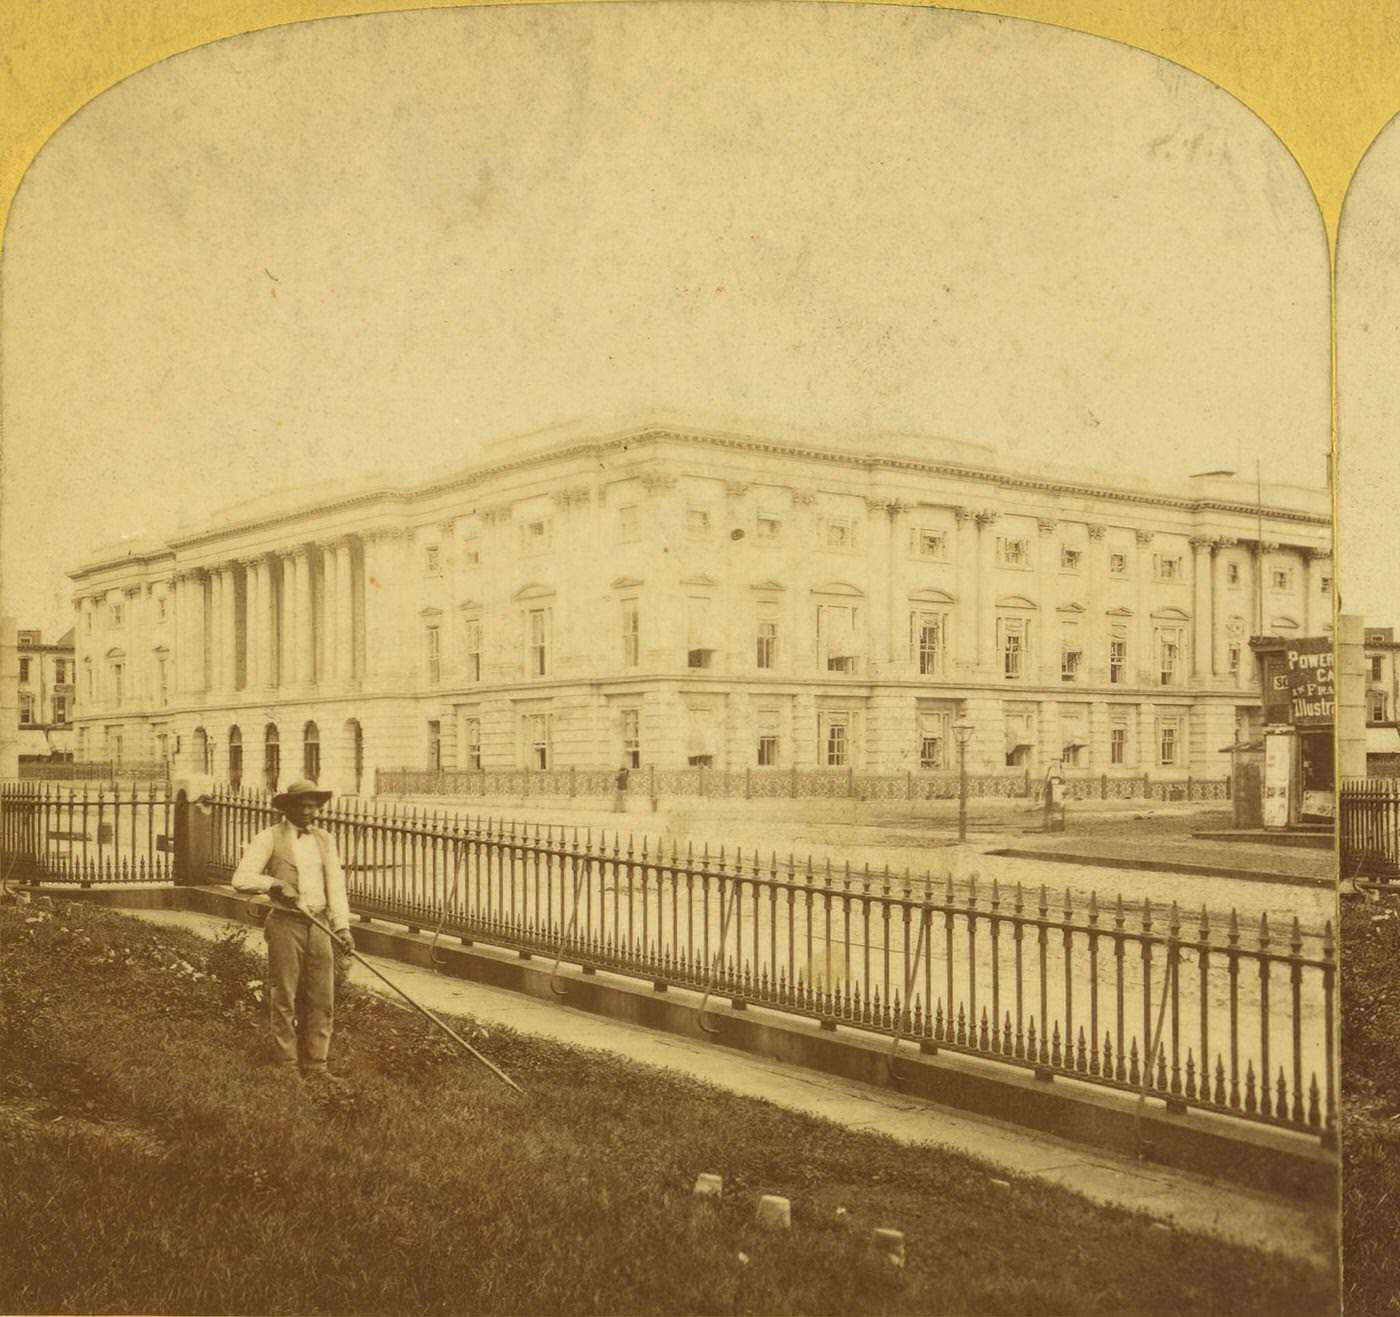 Post Office Department, Washington, D.C., 1860s